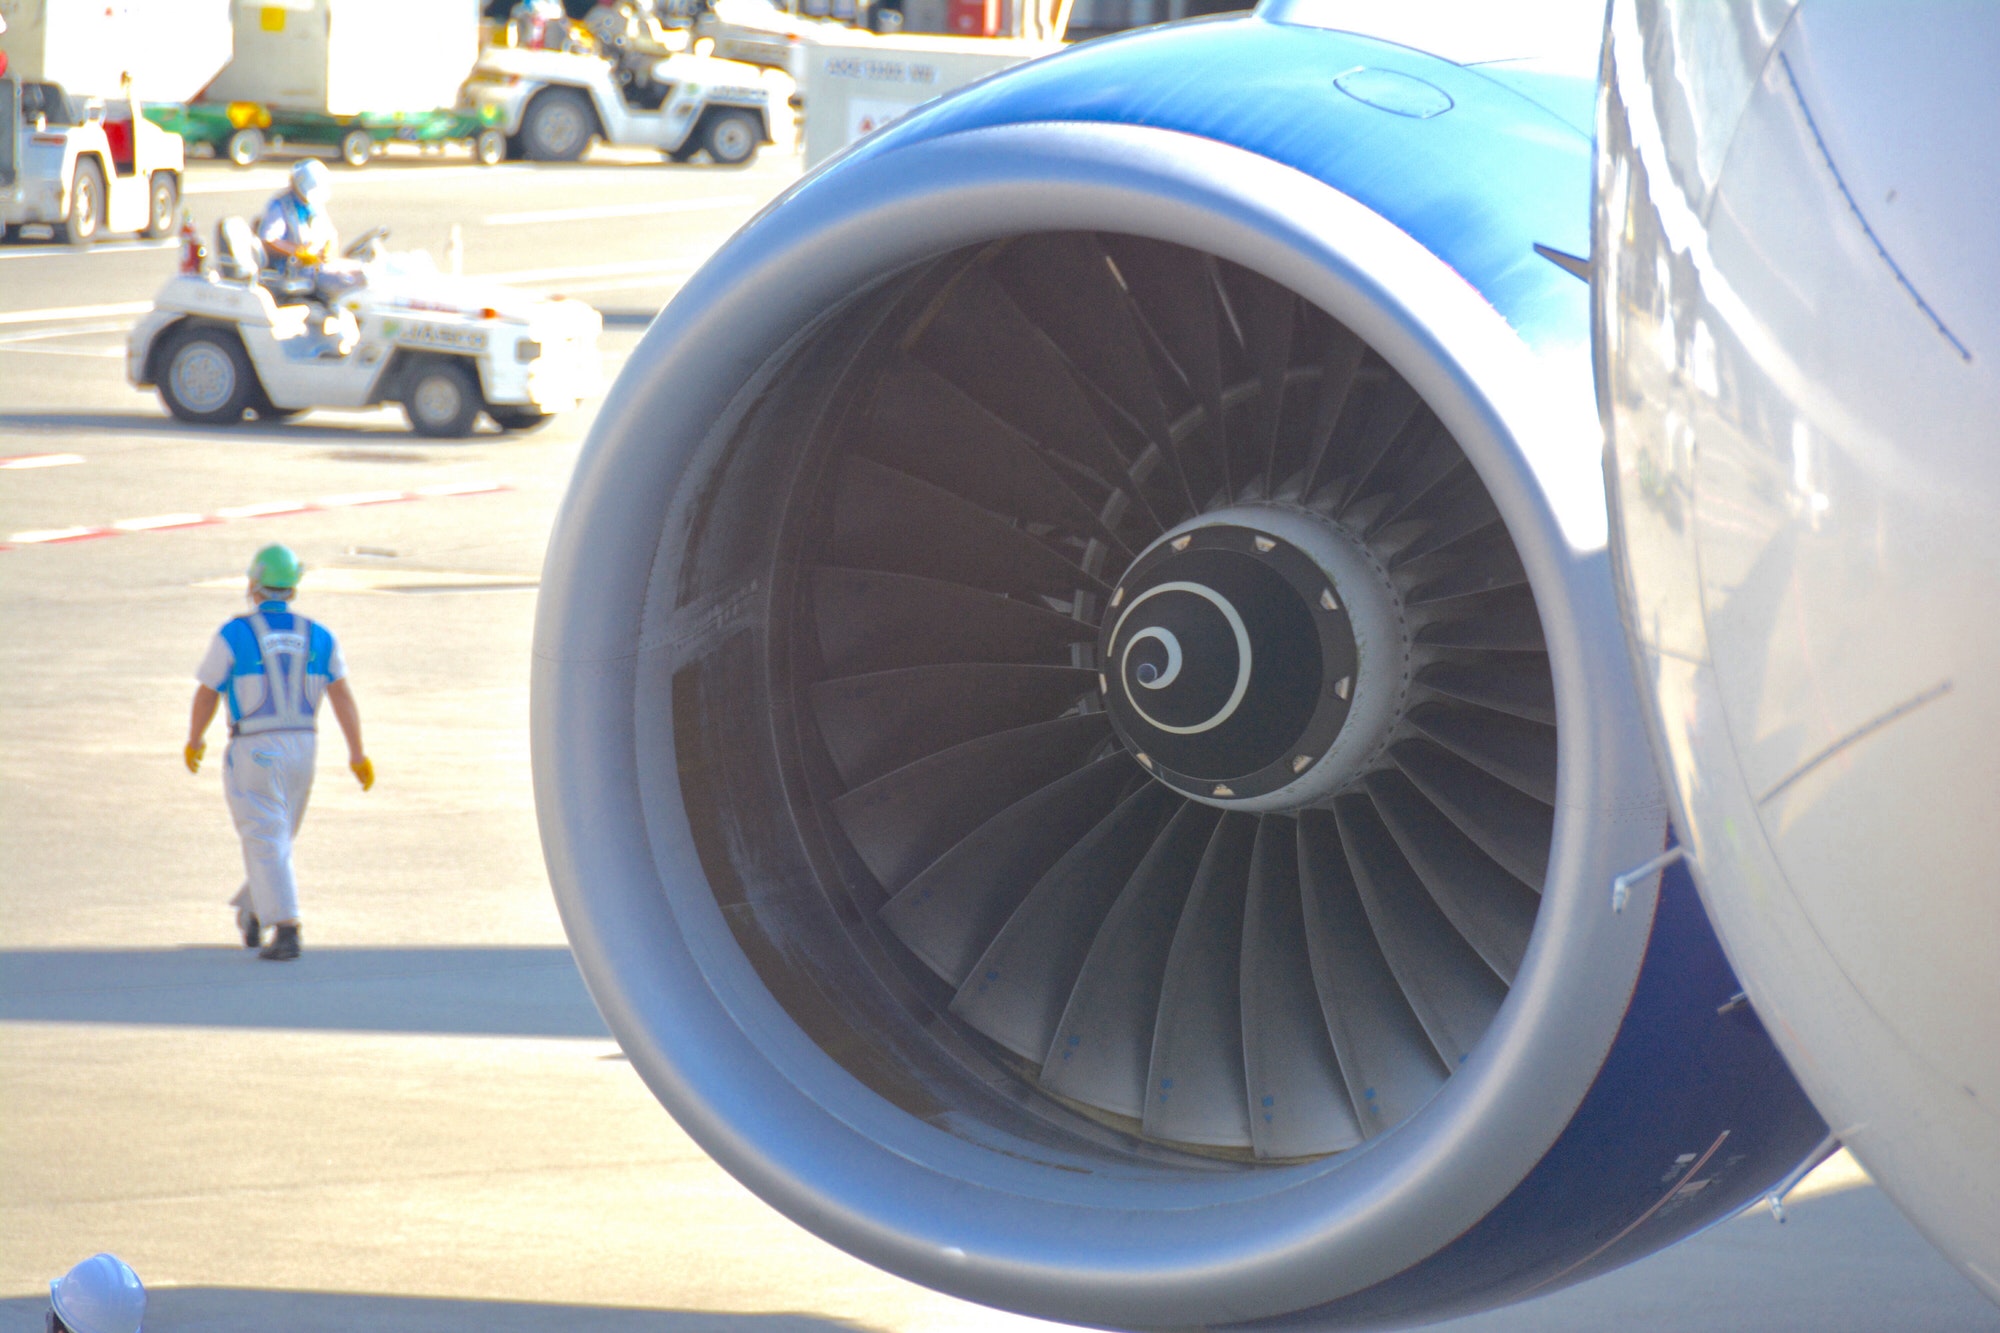 Airplane engine